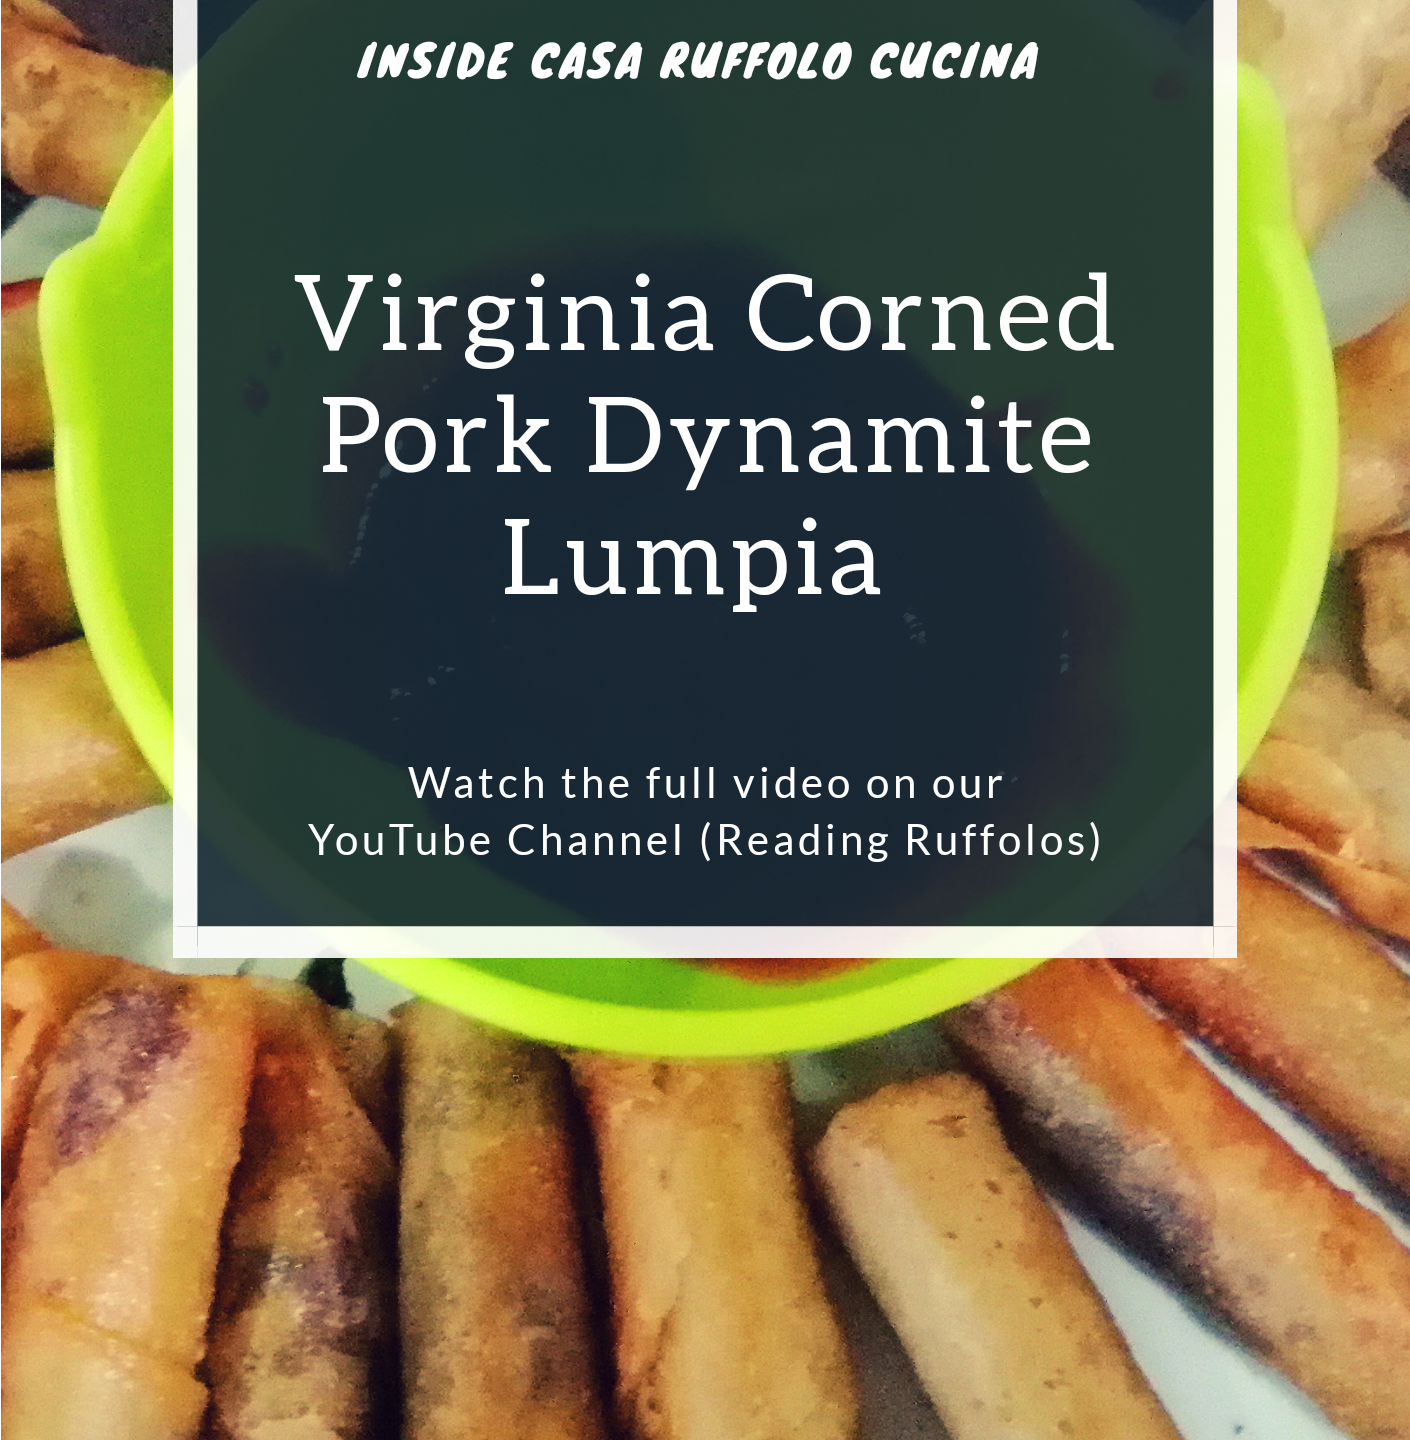 Virginia Corned Pork Dynamite Lumpia